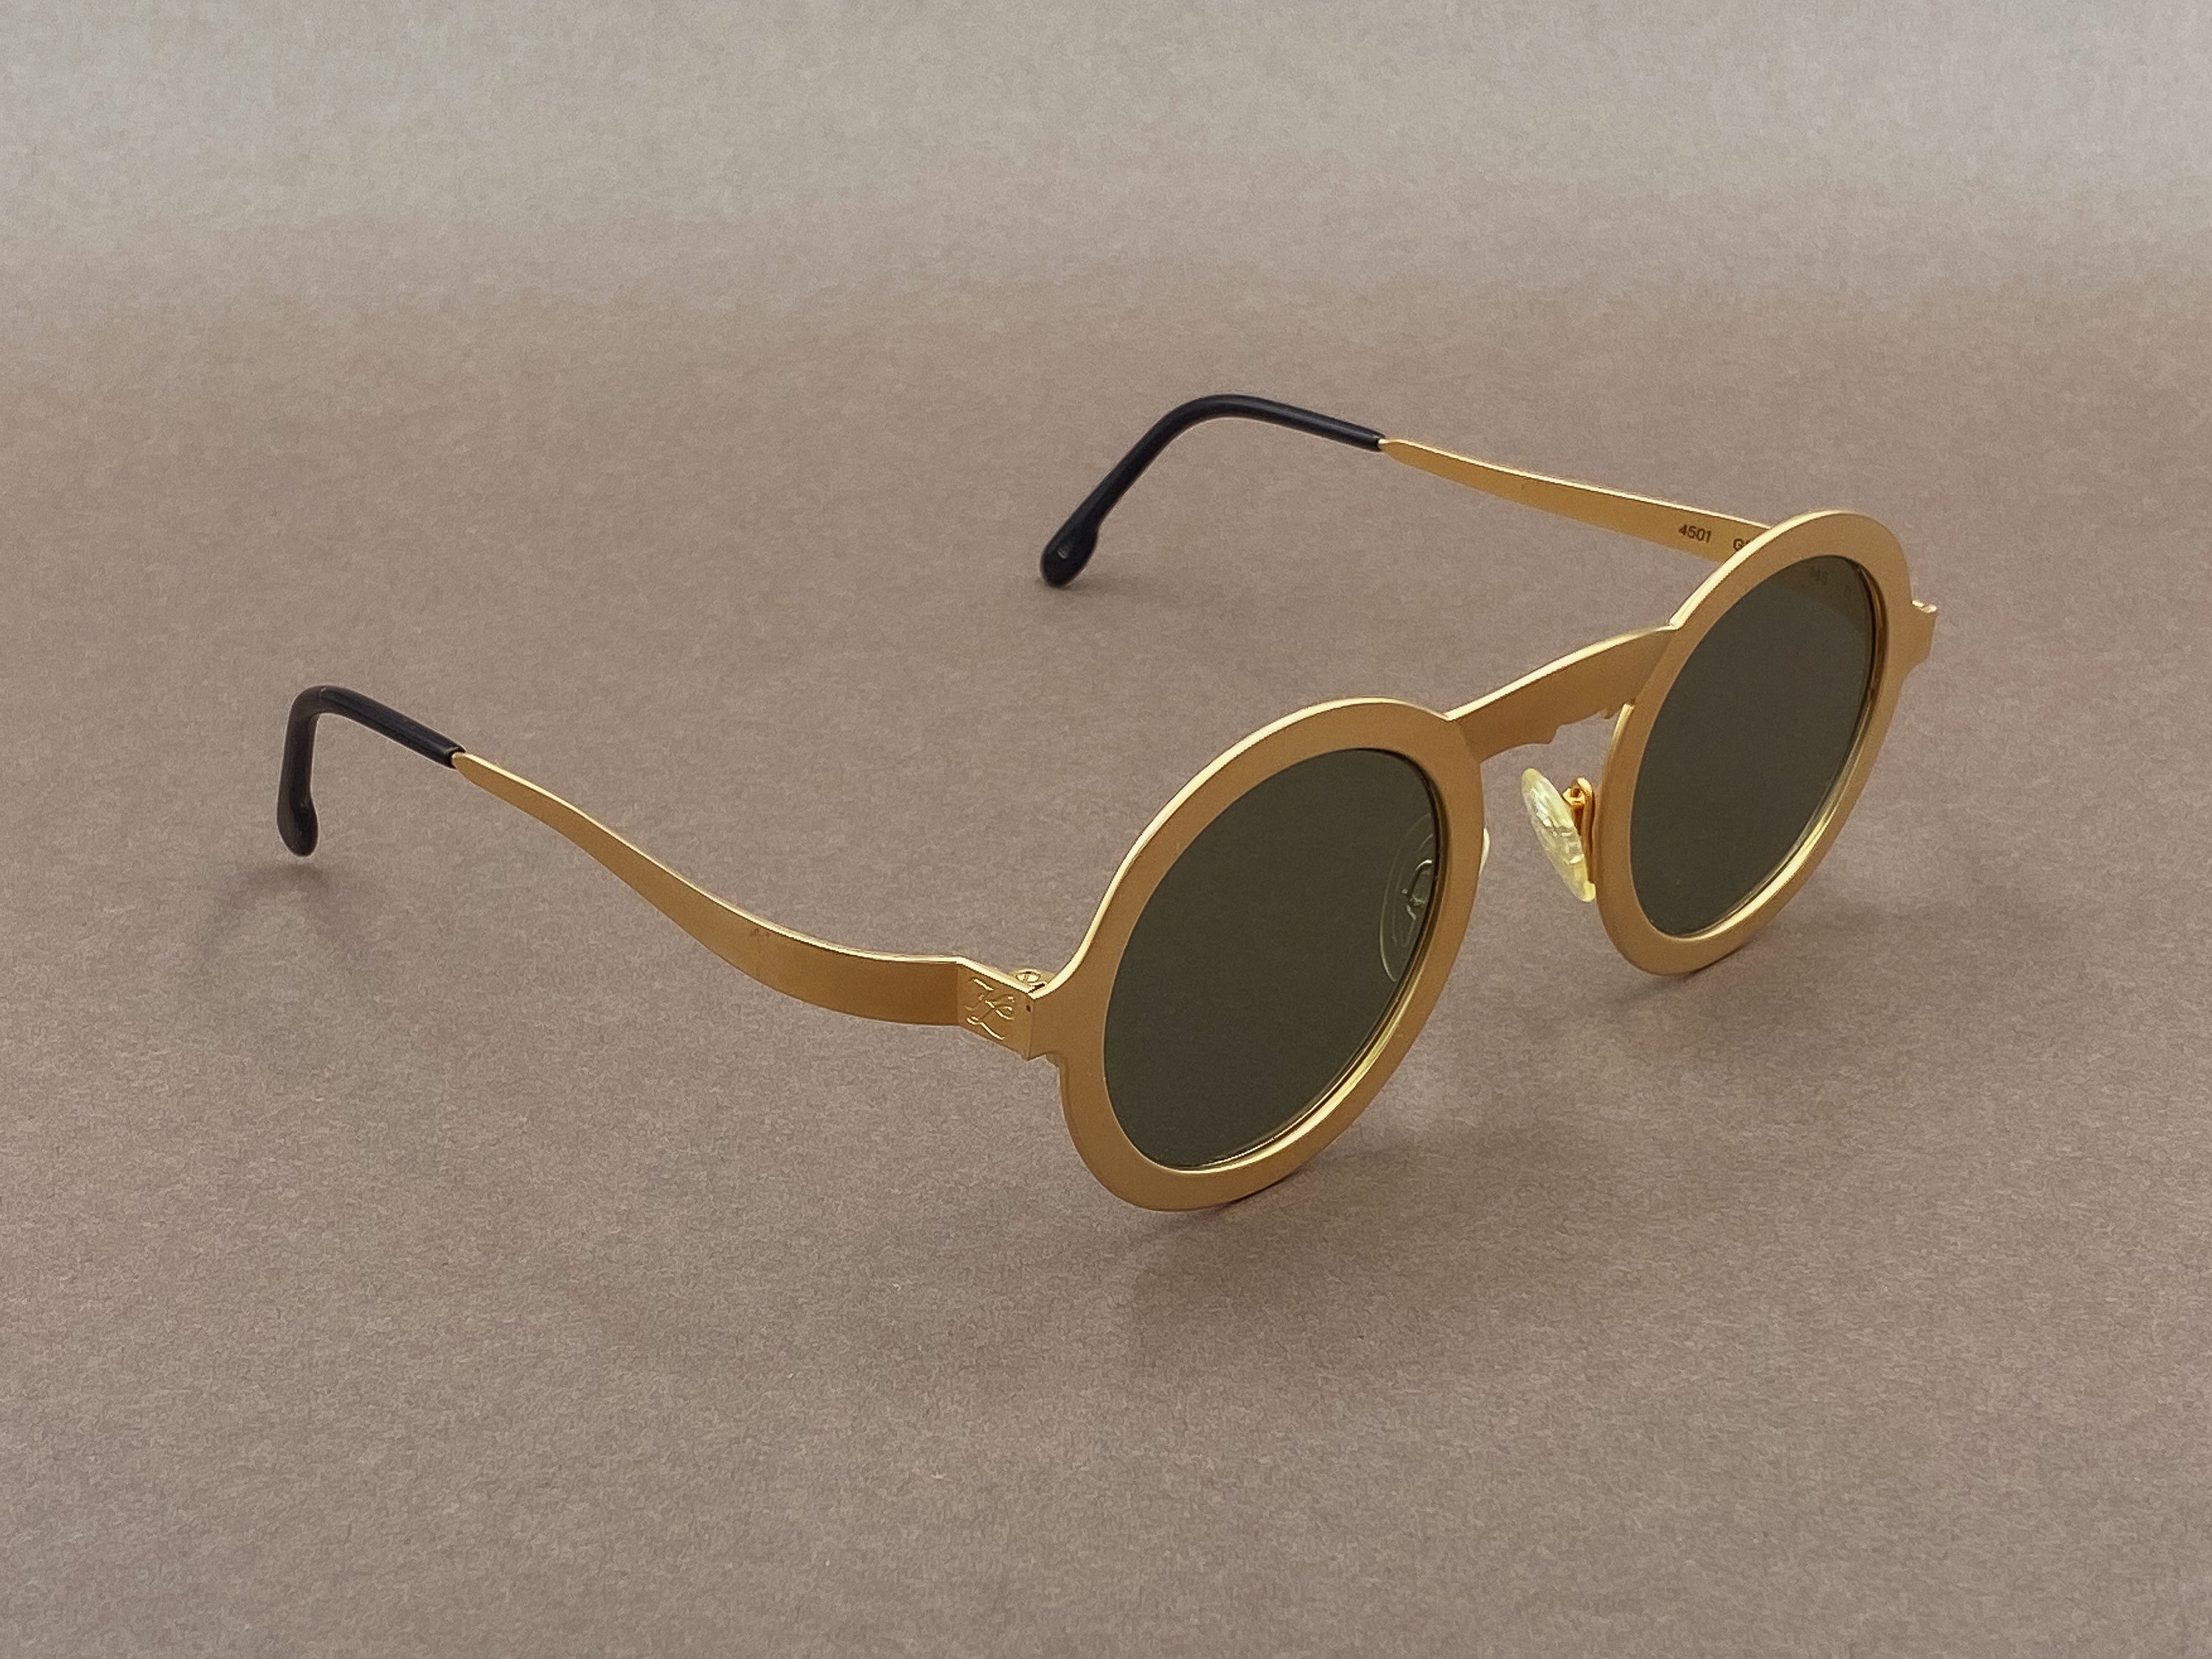 Karl Lagerfeld 4501 sunglasses